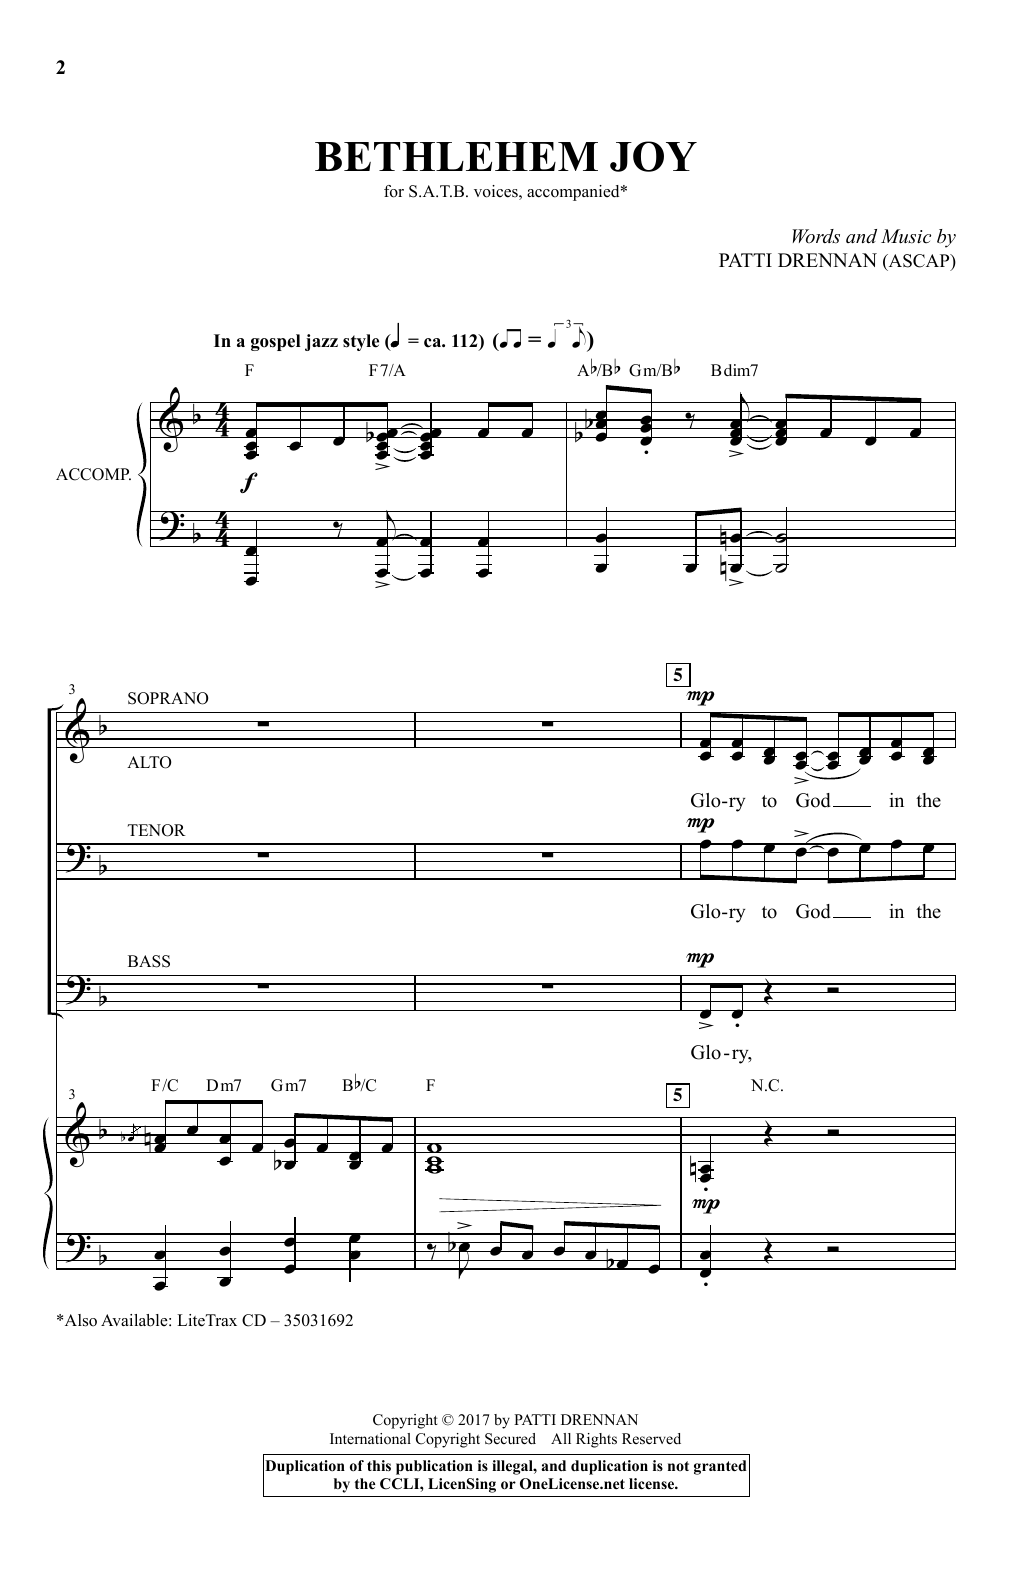 Download Patti Drennan Bethlehem Joy Sheet Music and learn how to play SATB PDF digital score in minutes